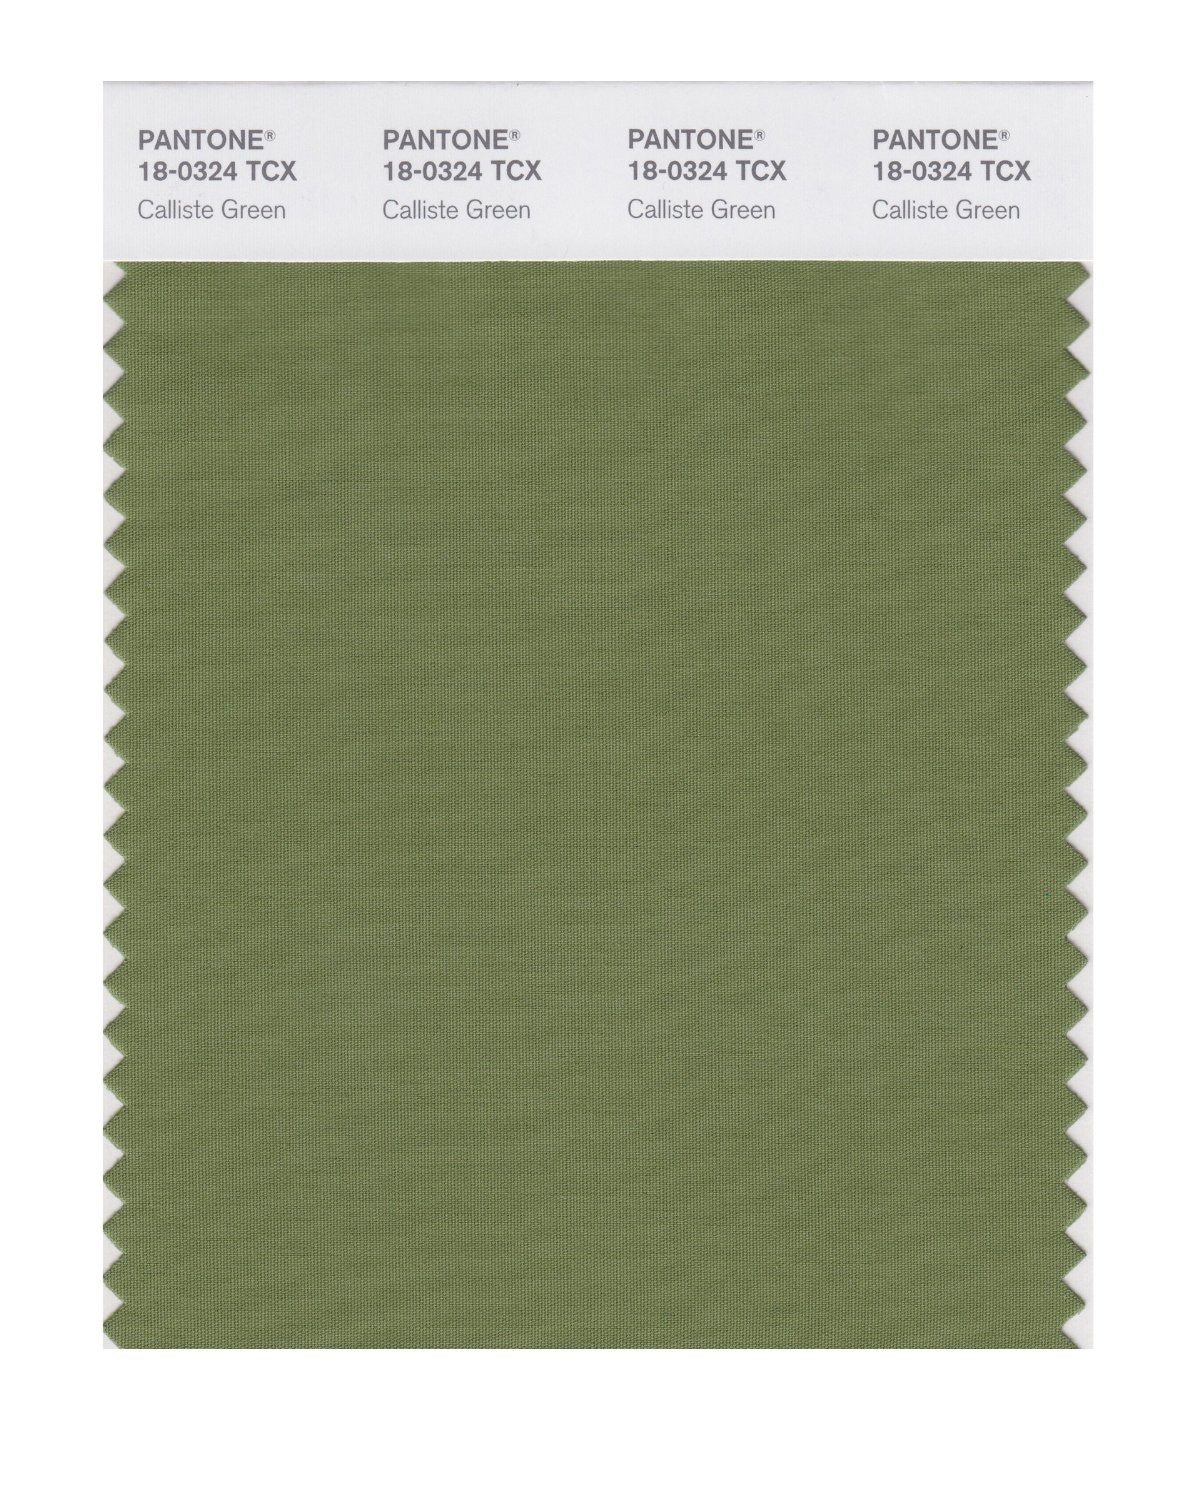 Pantone Cotton Swatch 18-0324 Calliste Green